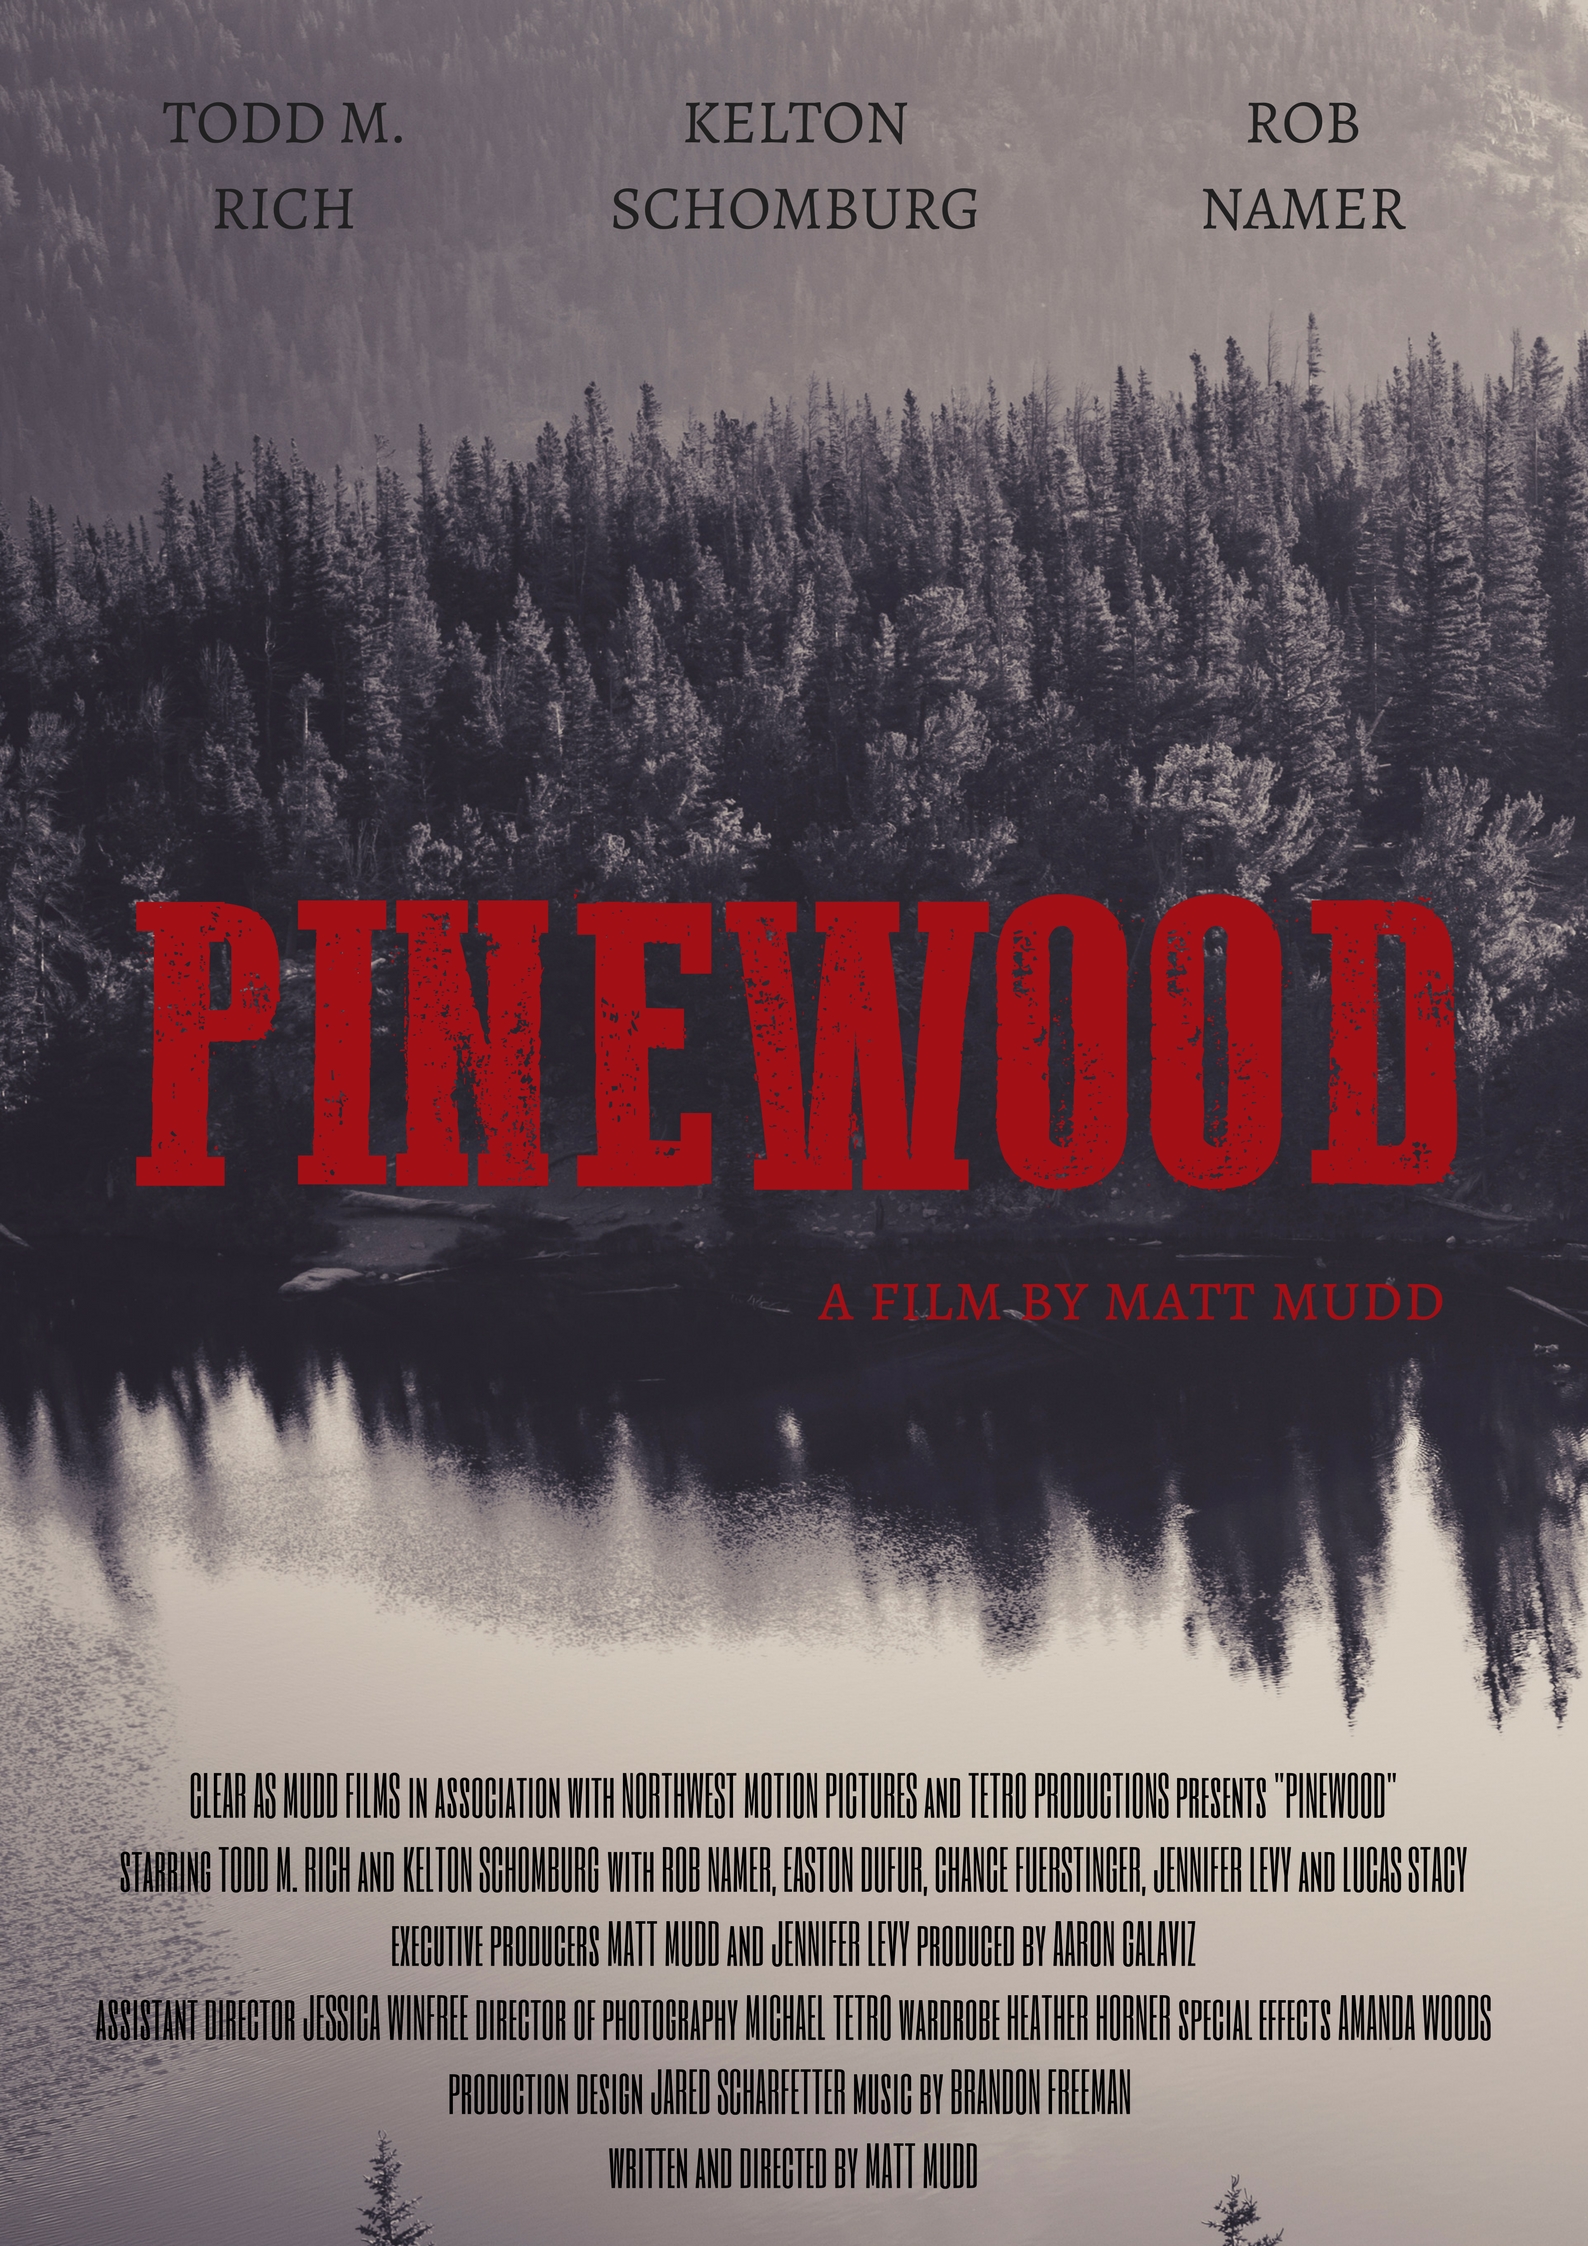 Pinewood